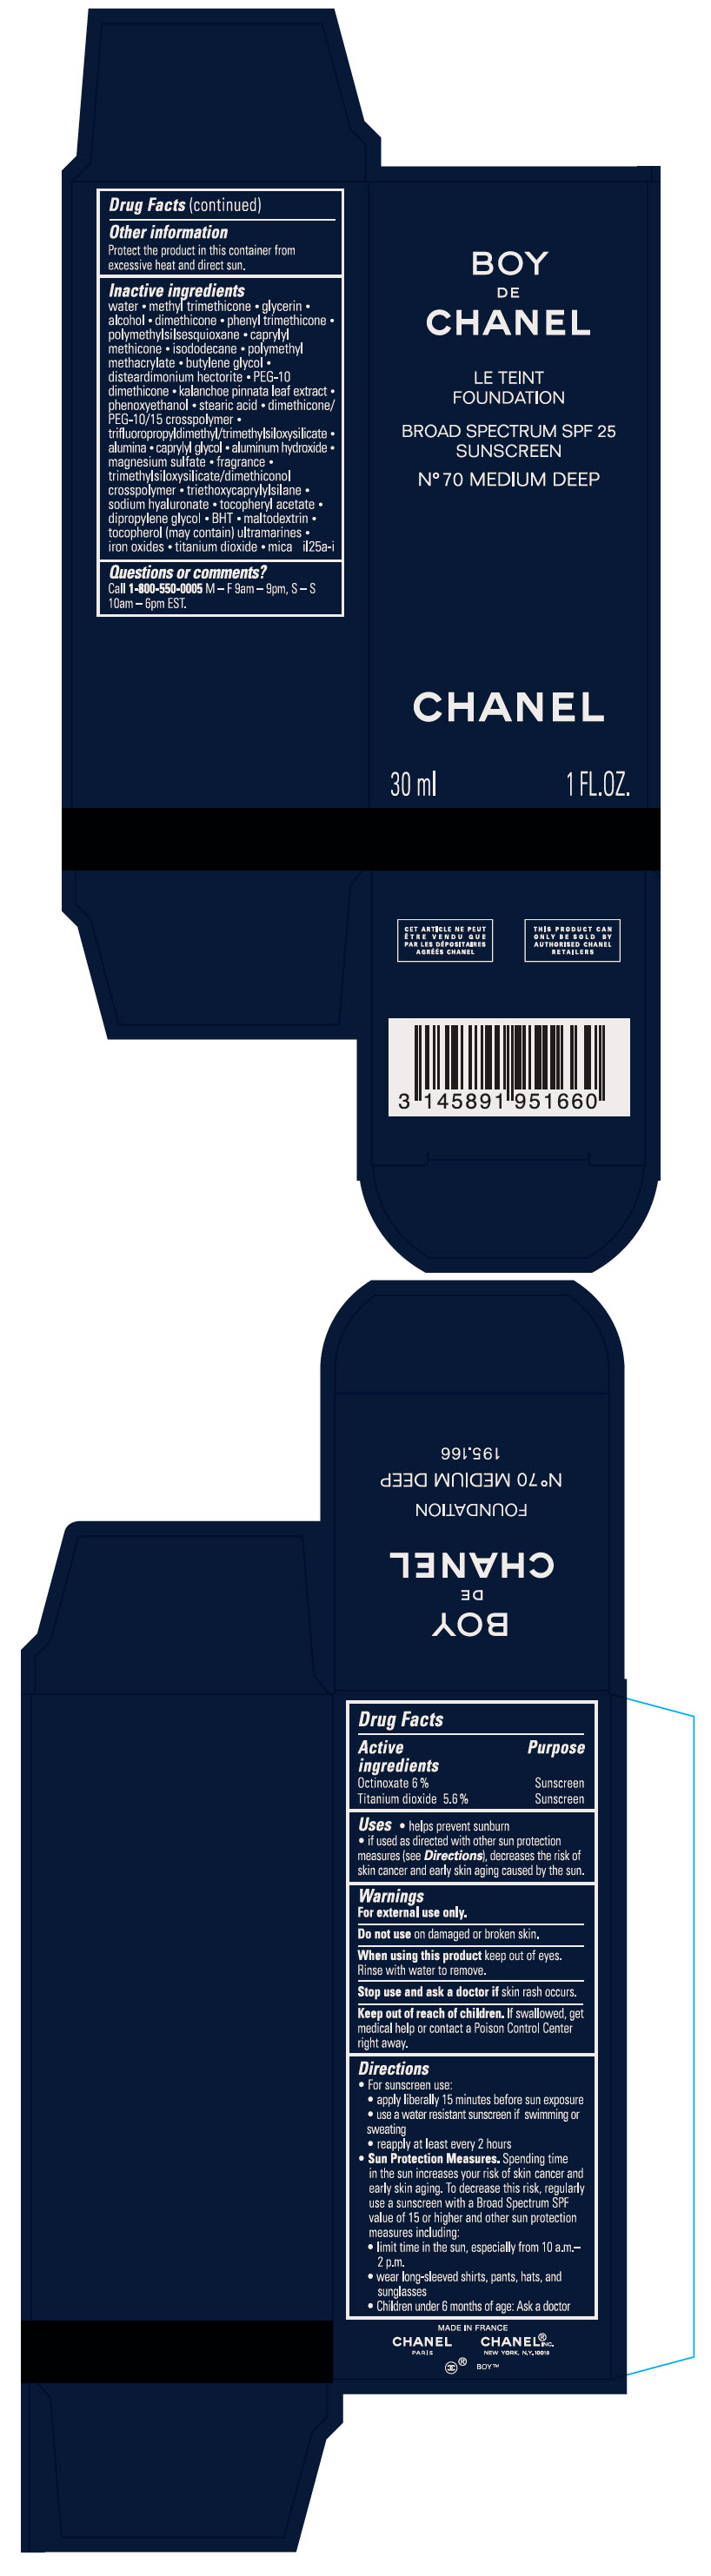 PRINCIPAL DISPLAY PANEL - 30 ml Bottle Carton - N°70 Medium Deep